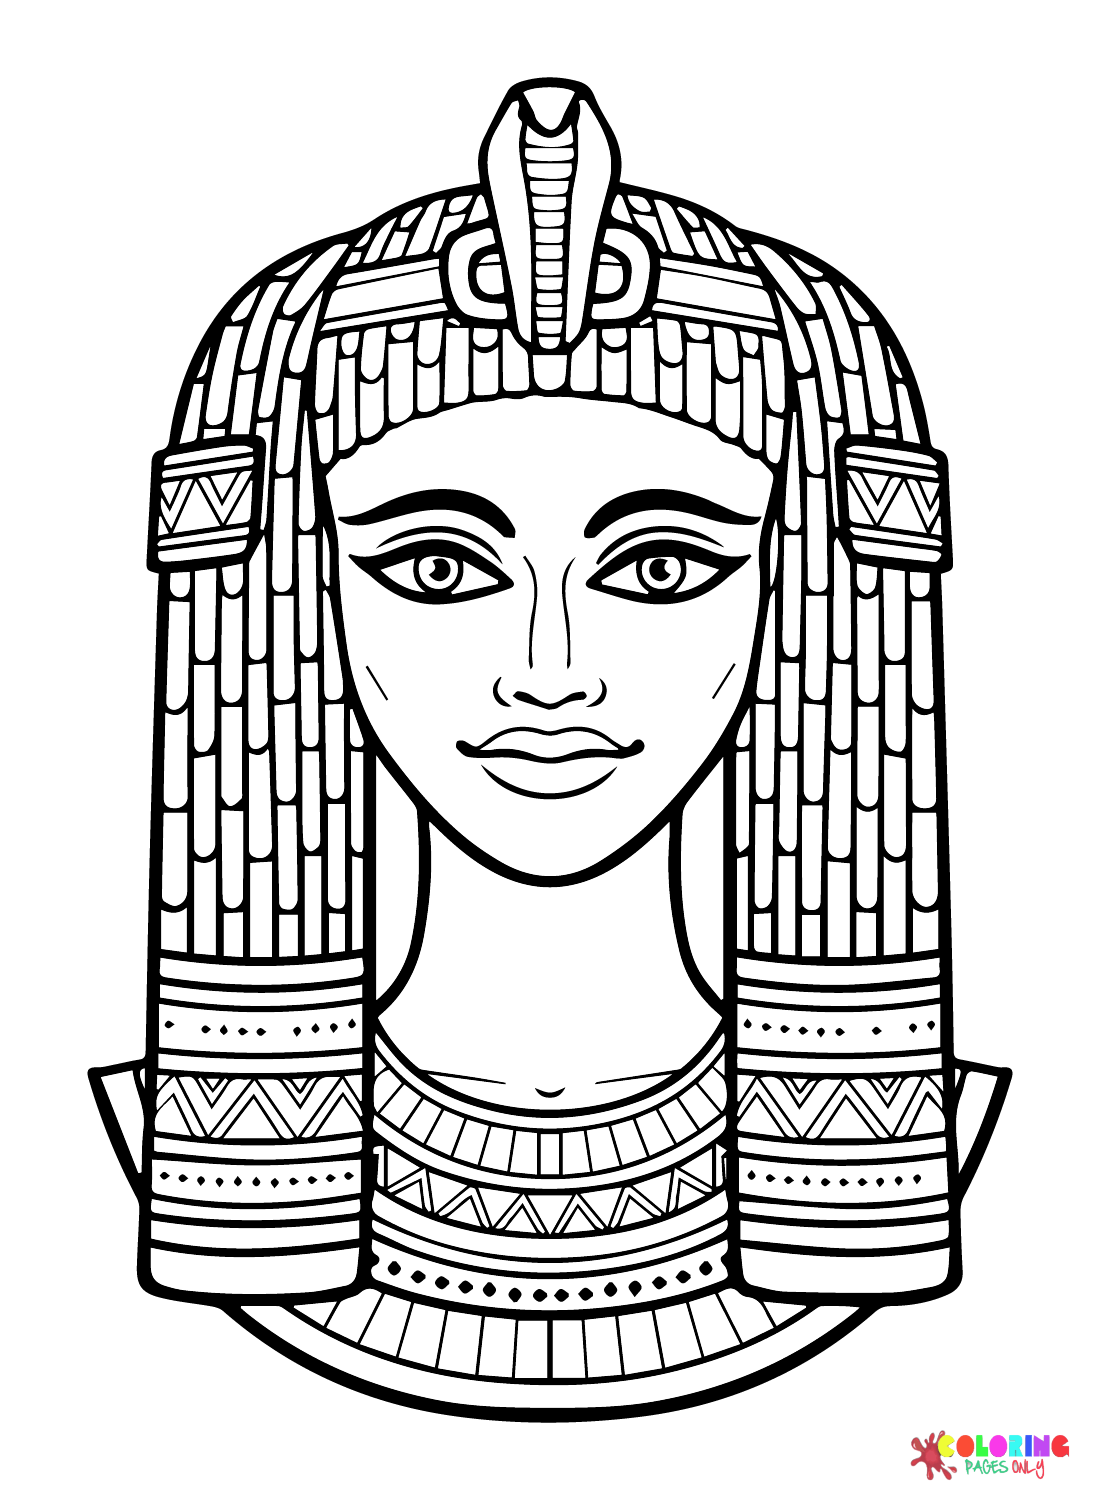 Dibujo para colorear del Antiguo Egipto